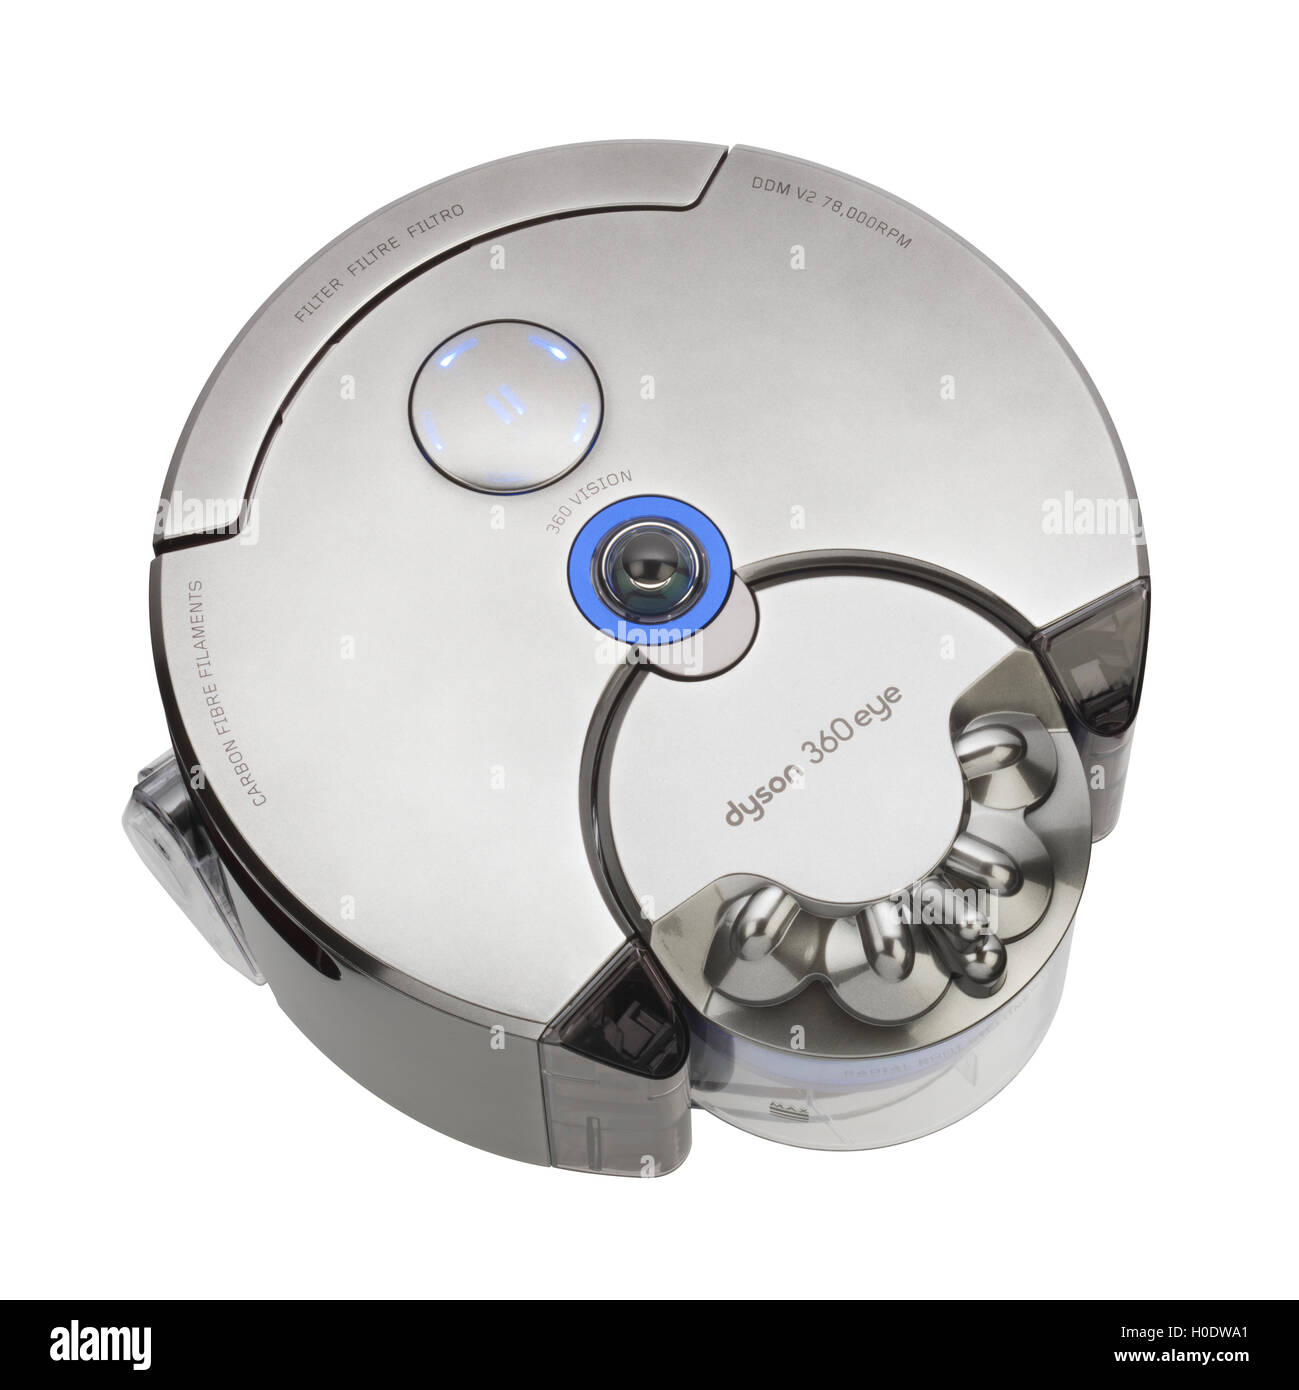 Dyson 360 Auge Roboter-Staubsauger Stockfotografie - Alamy